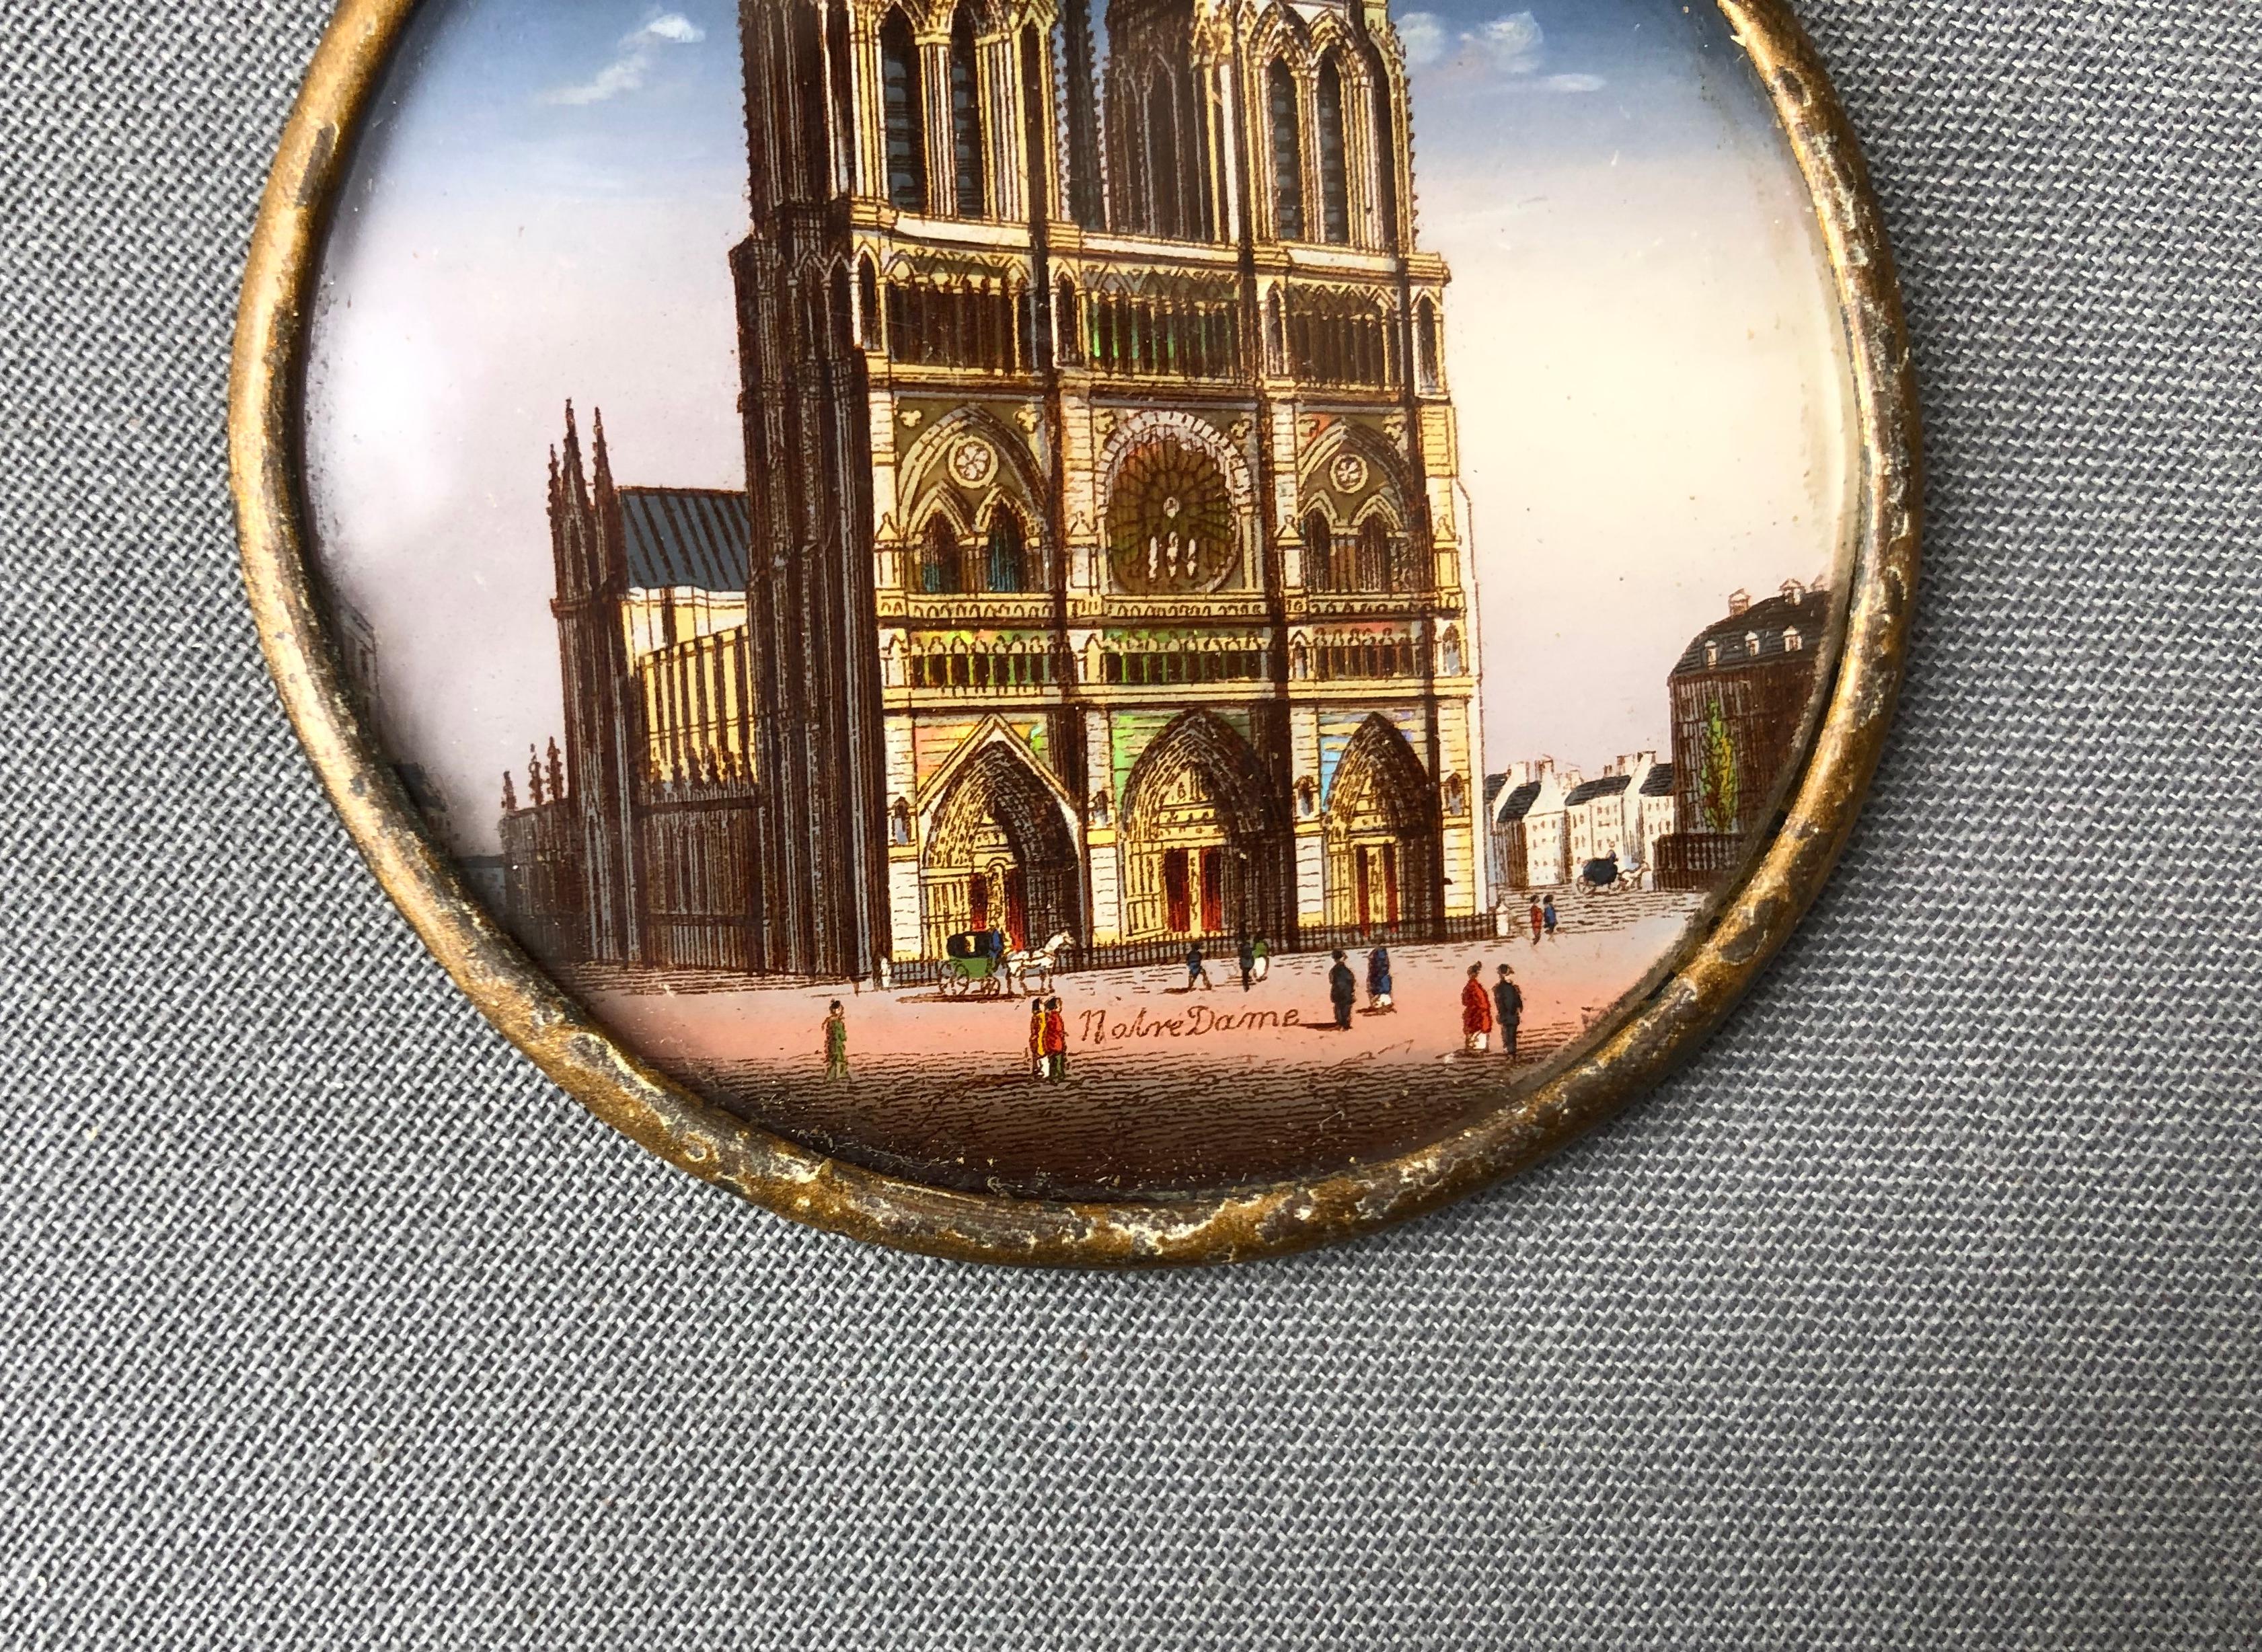 Notre Dame, Painted Miniature, Souvenir from Paris - Painting by Unknown